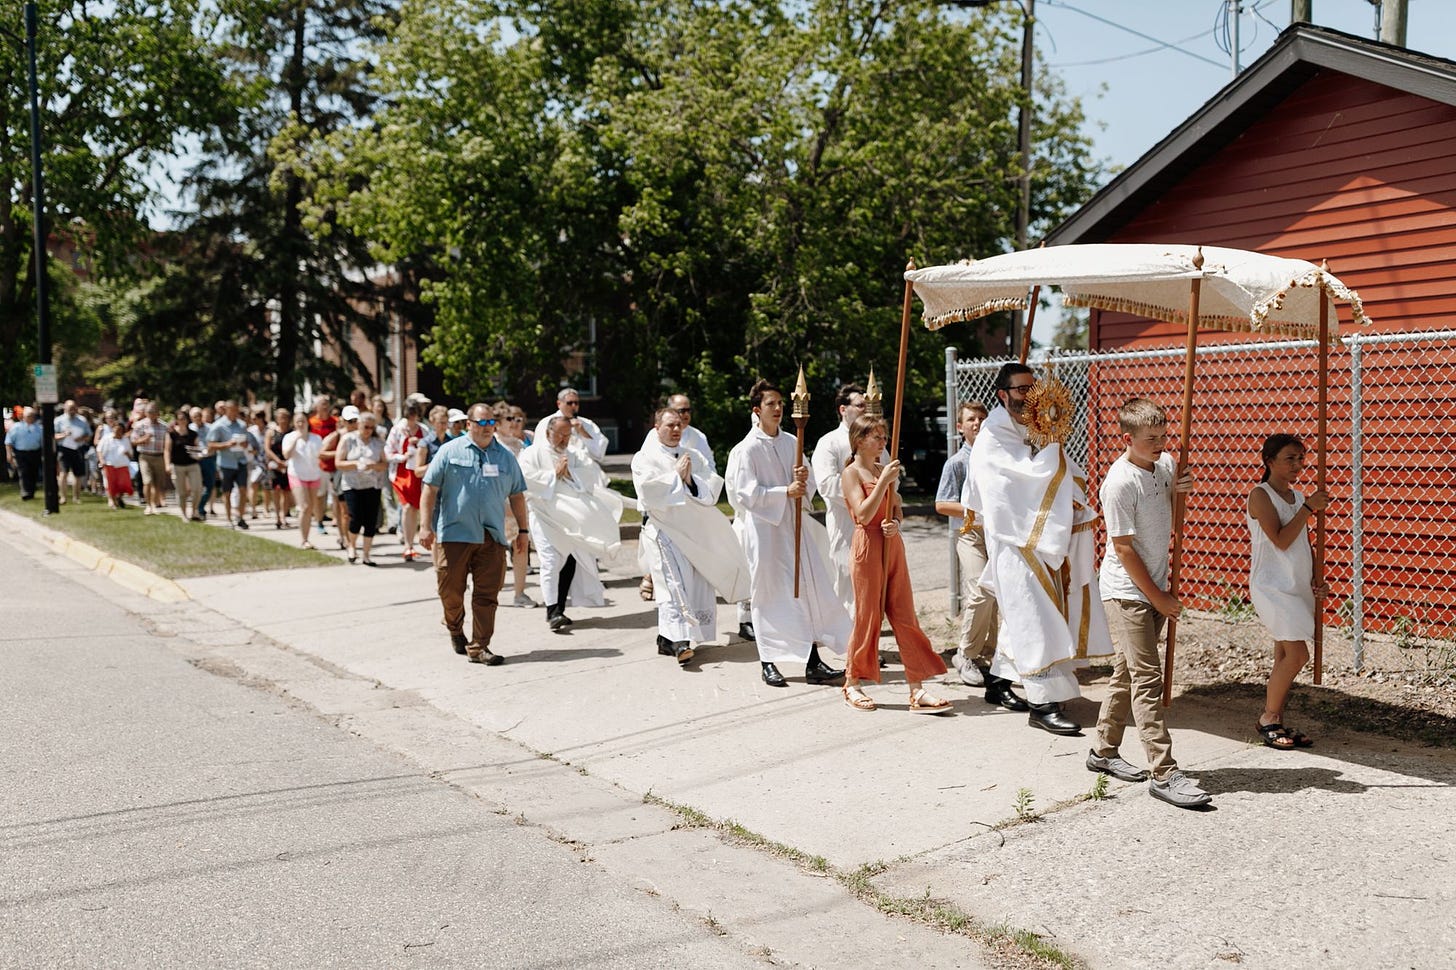 A 'deeper walk with Jesus' - Eucharistic revival plans walking US pilgrimages